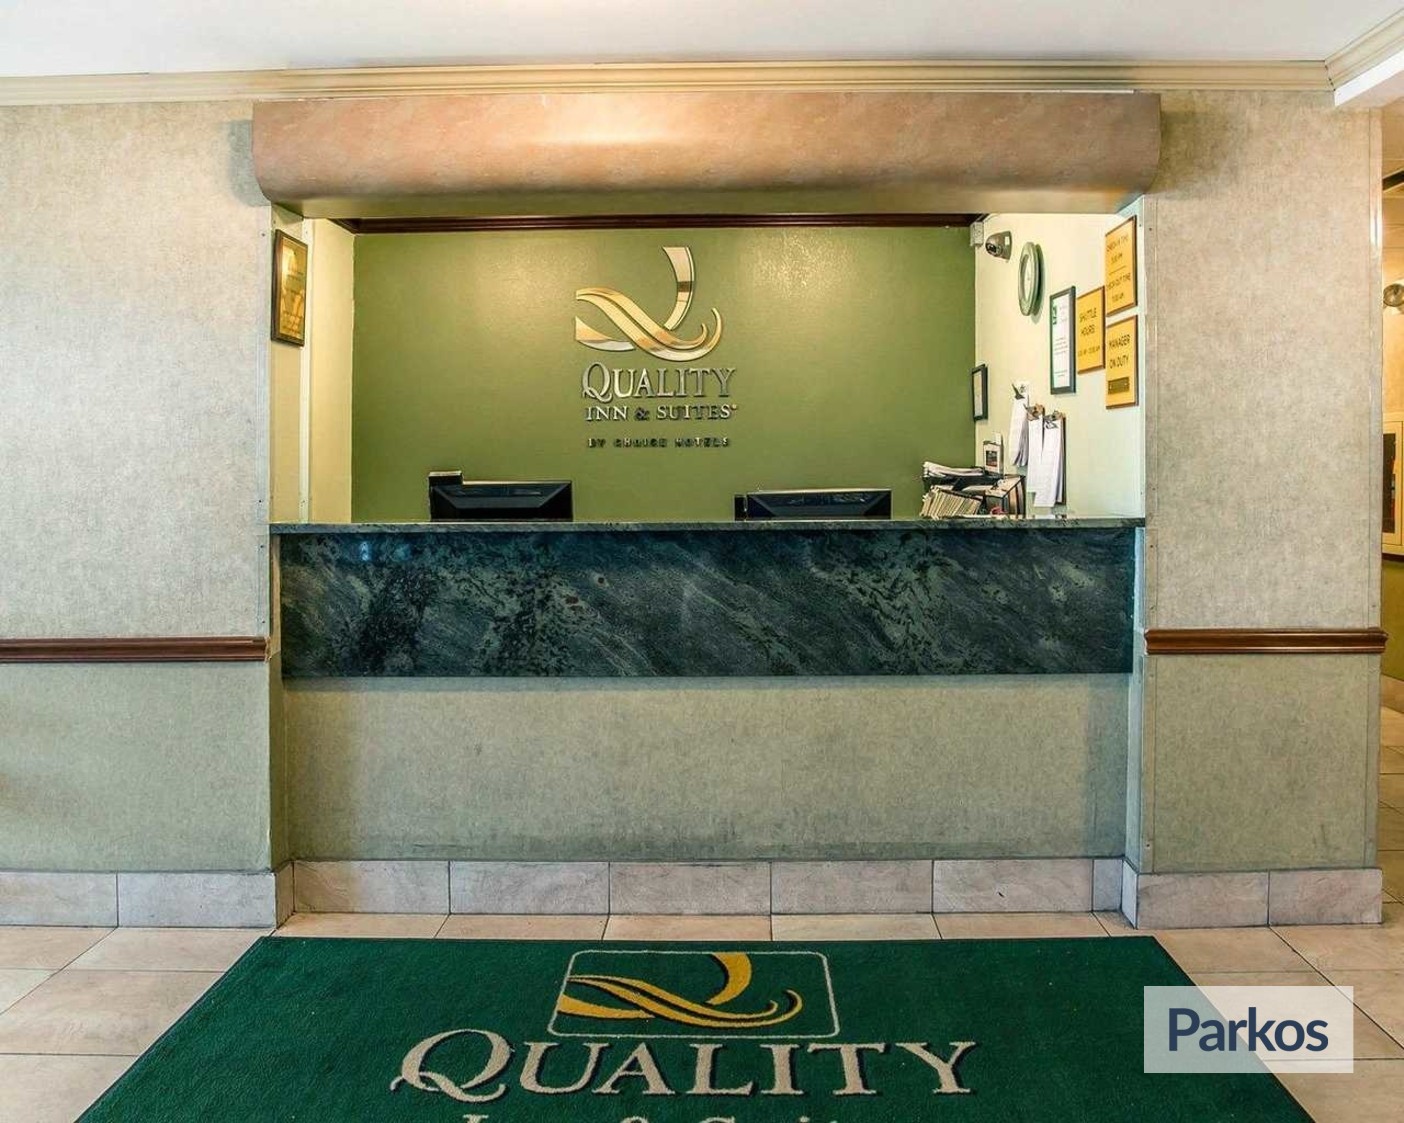 Quality Inn & Suites (CVG) - CVG Parking - picture 1